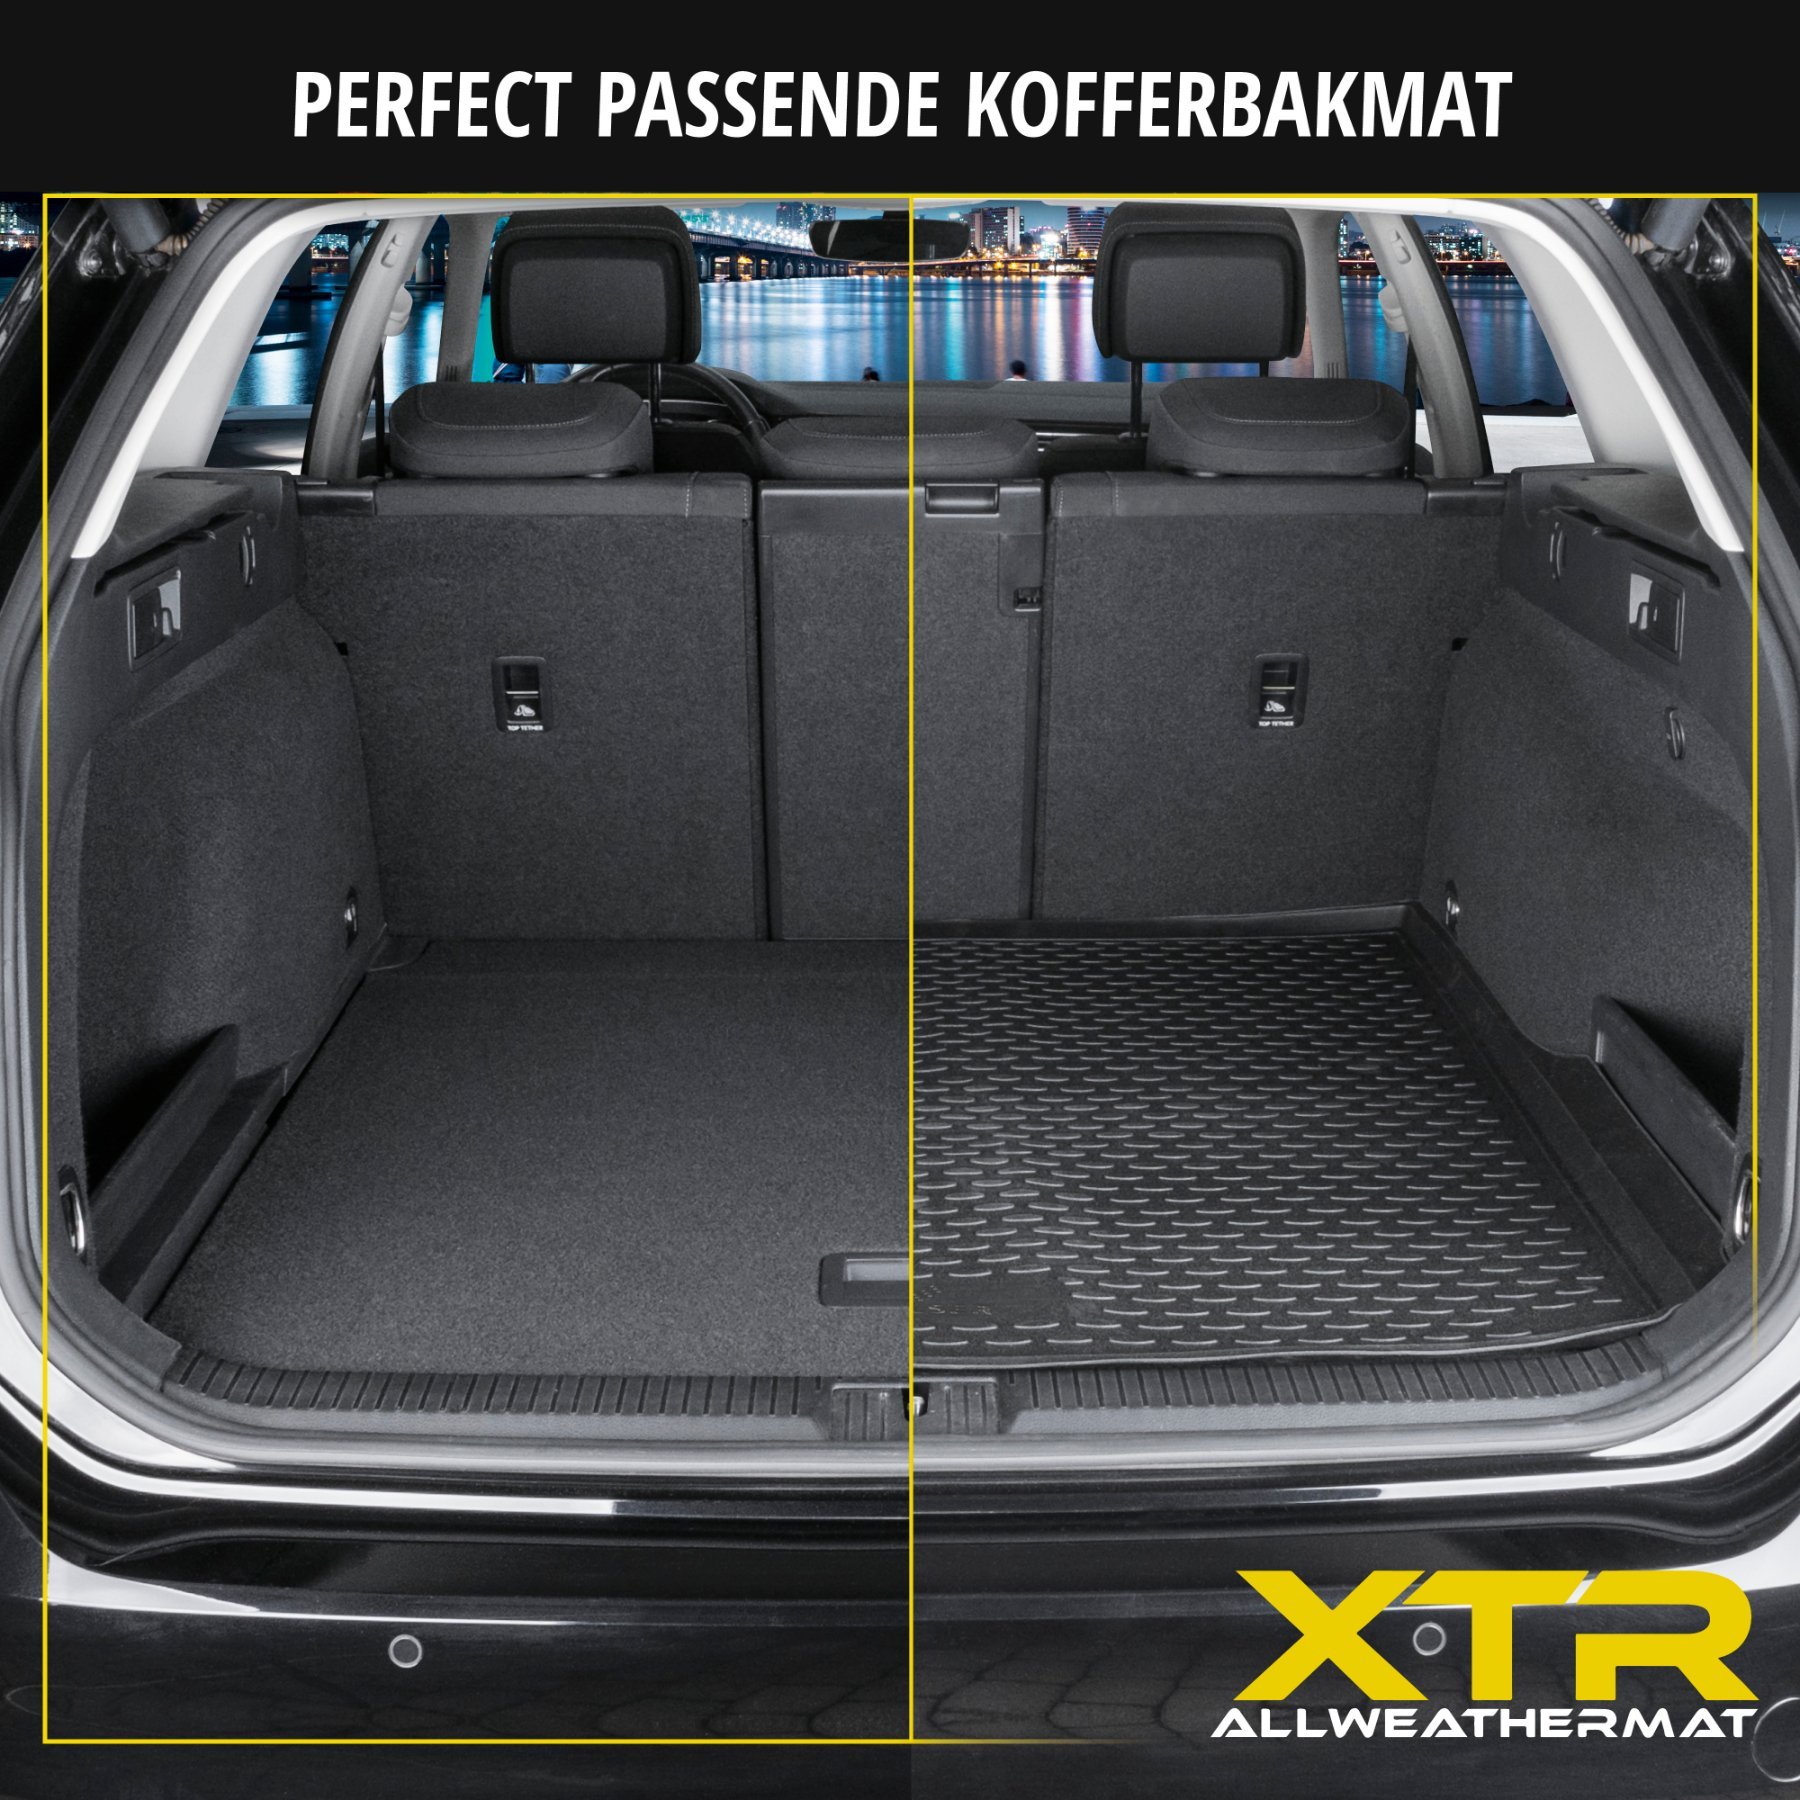 Kofferbakmat XTR geschikt voor BMW 7er Limousine 02/2008 - 12/2015, Notchback